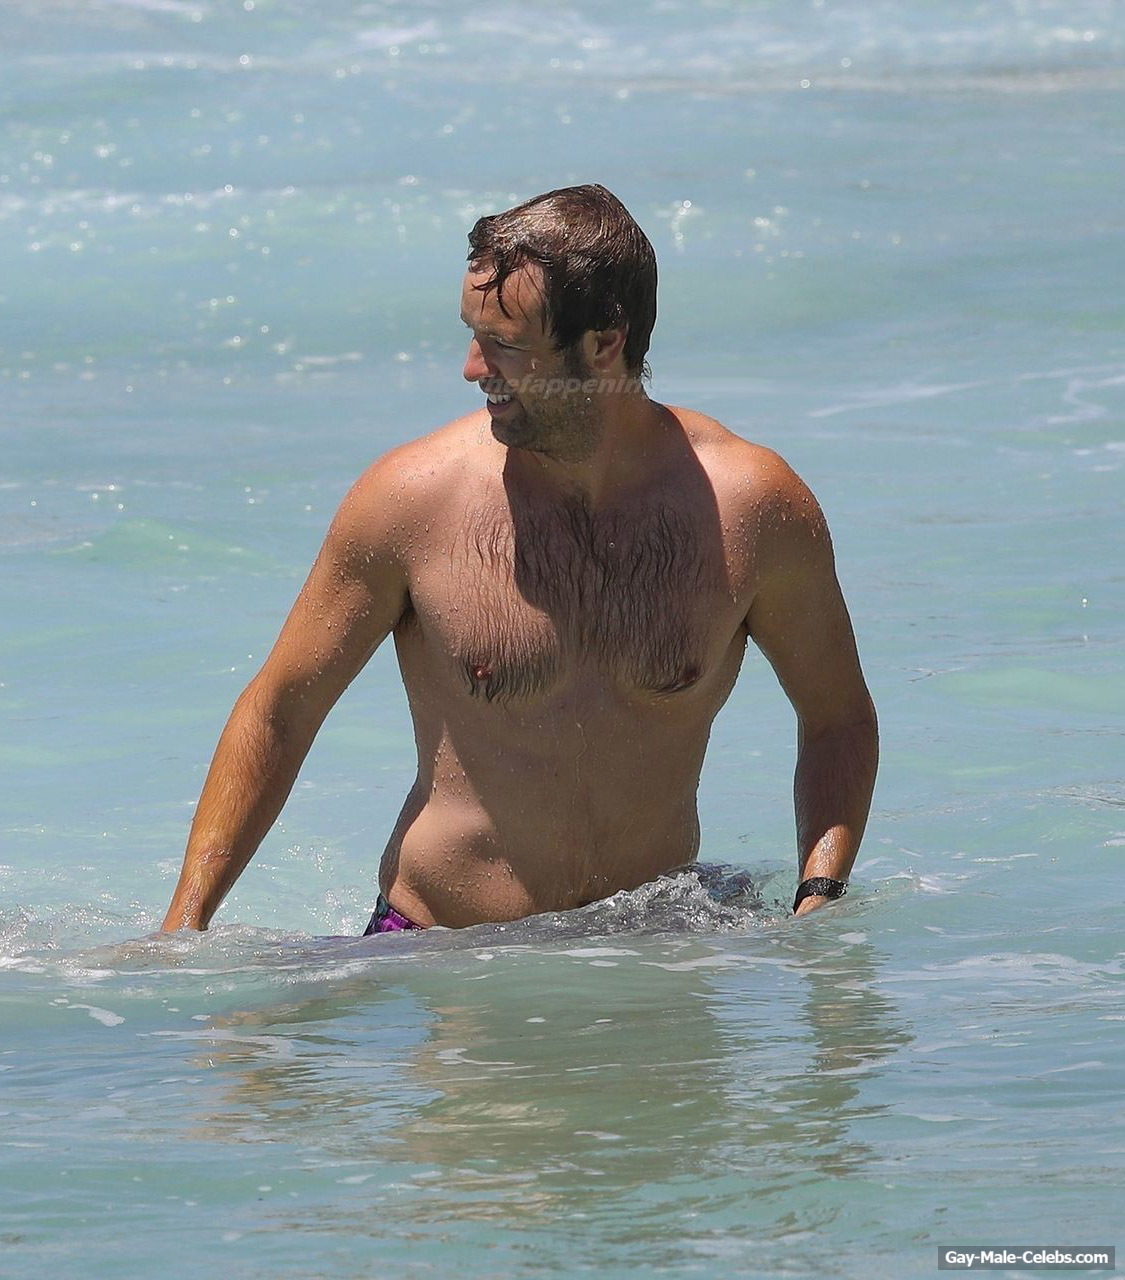 Danny Clayton Sunbathing Shirtless On A Beach